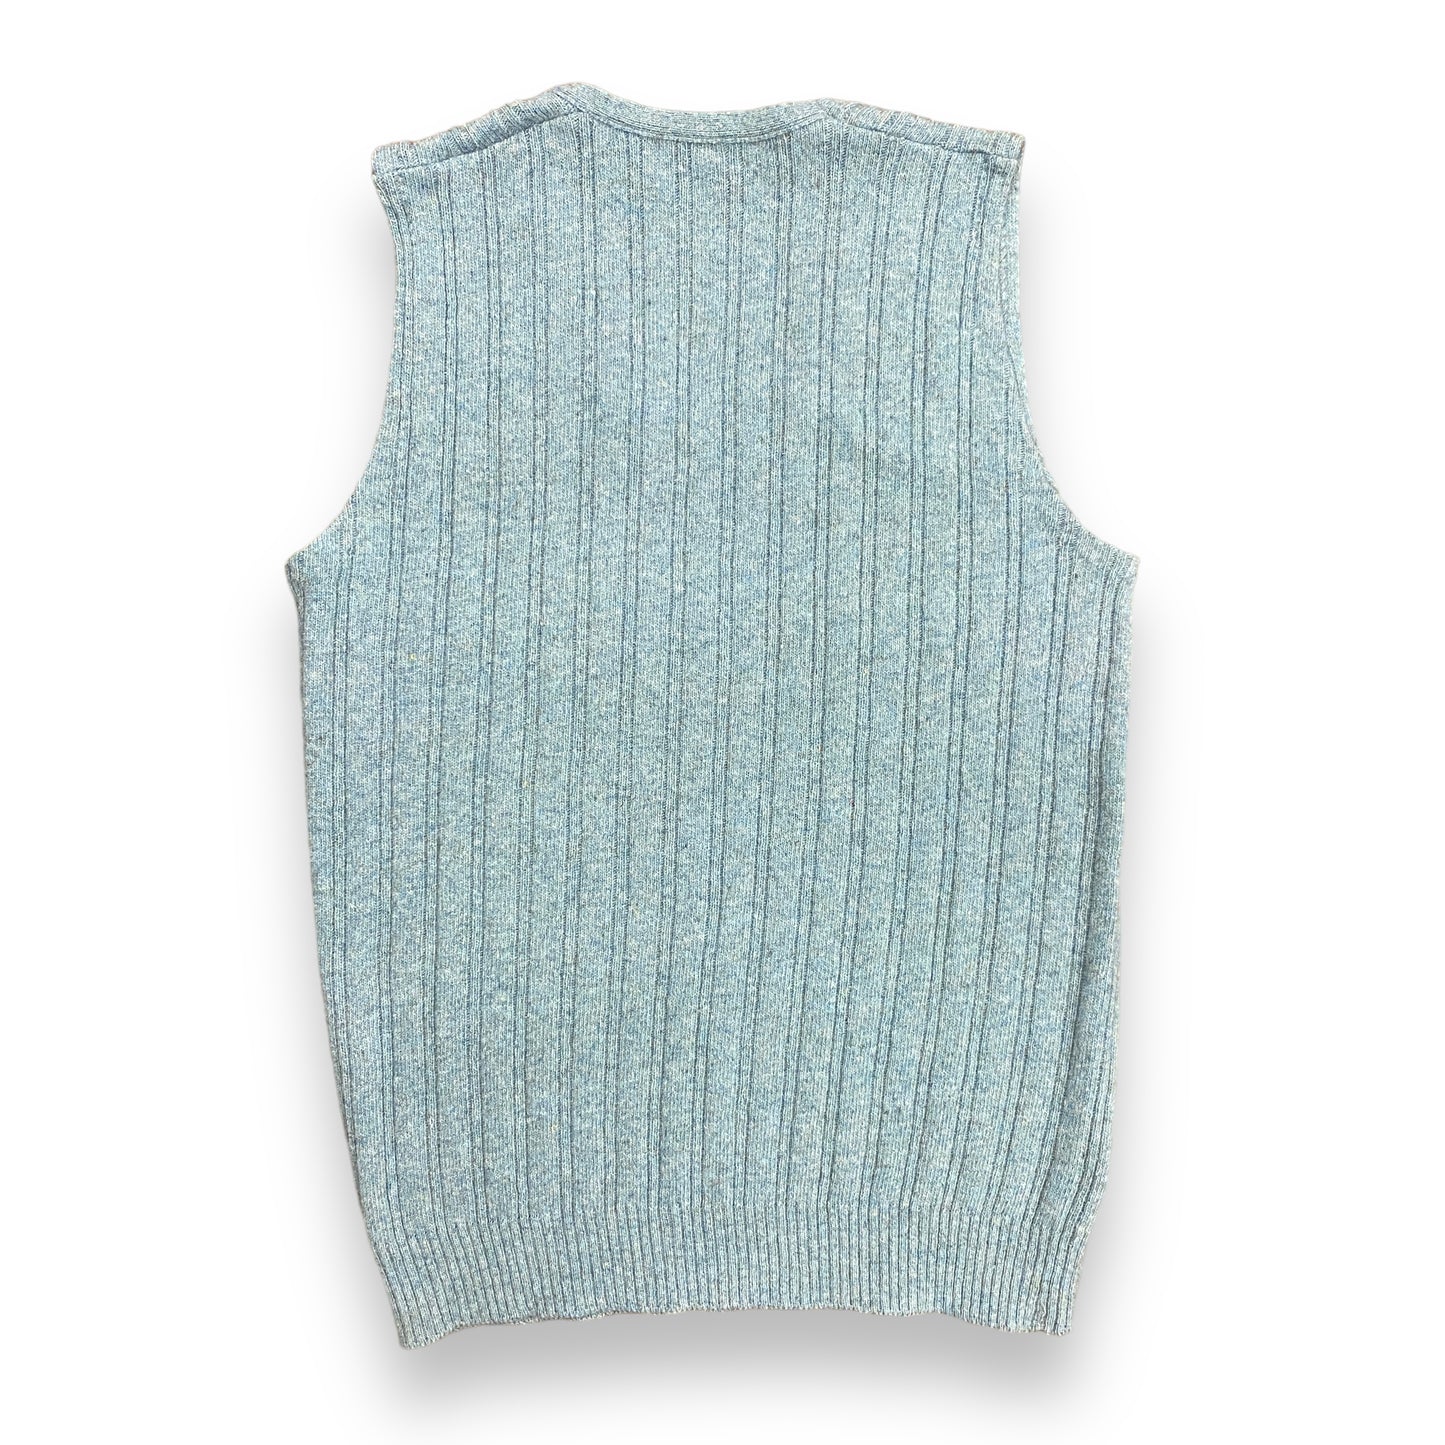 1970s Light Blue Lambswool Sweater Vest - Size Medium